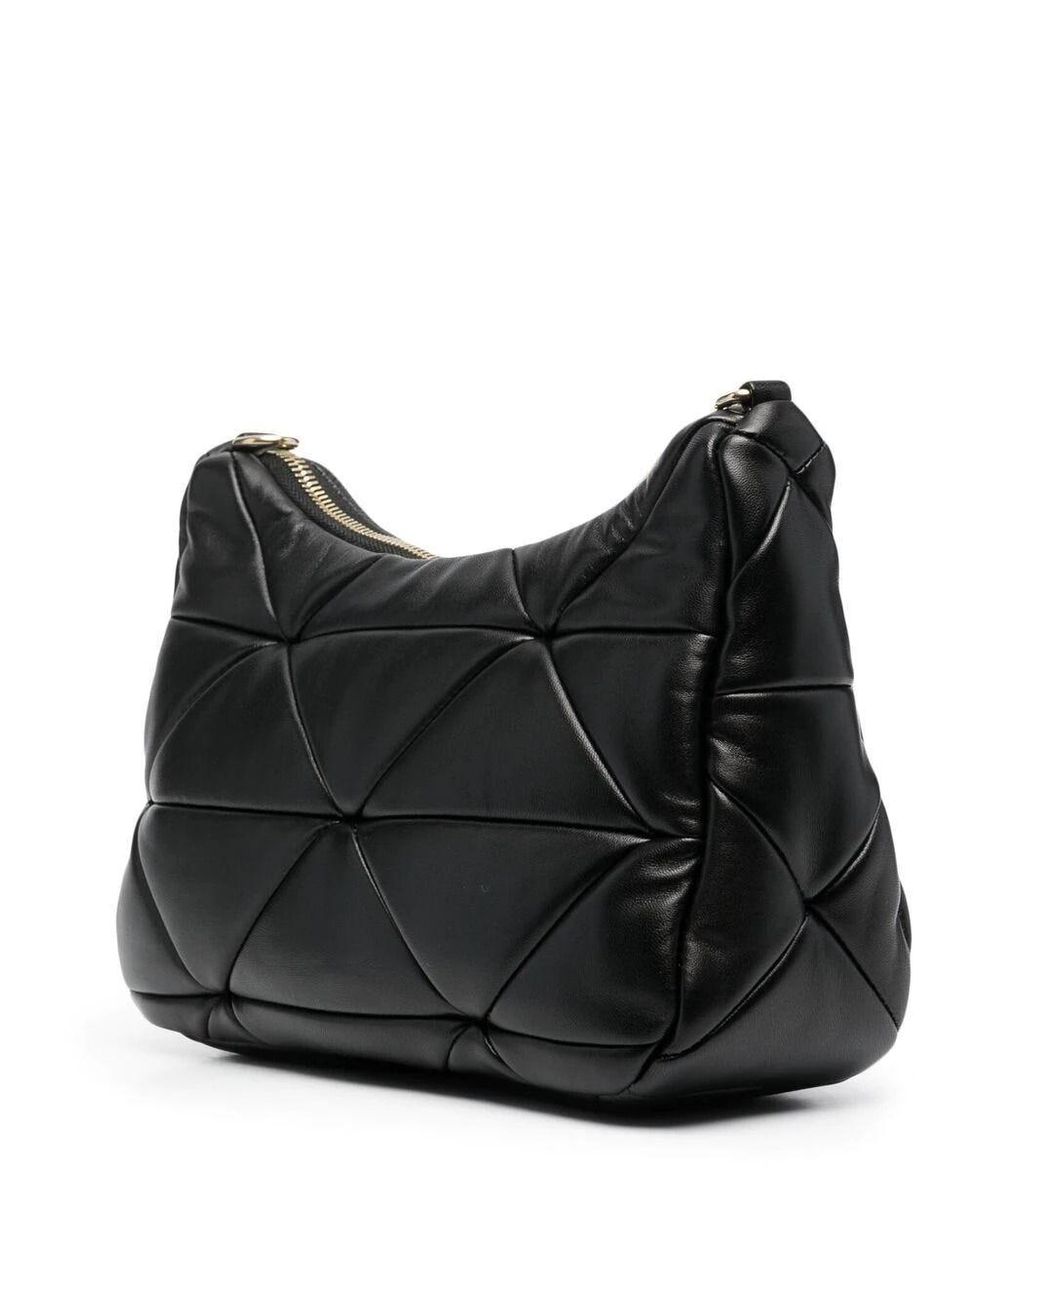 PRADA: System bag in patch nappa - Black  Prada shoulder bag 1BD292 2DMO  online at